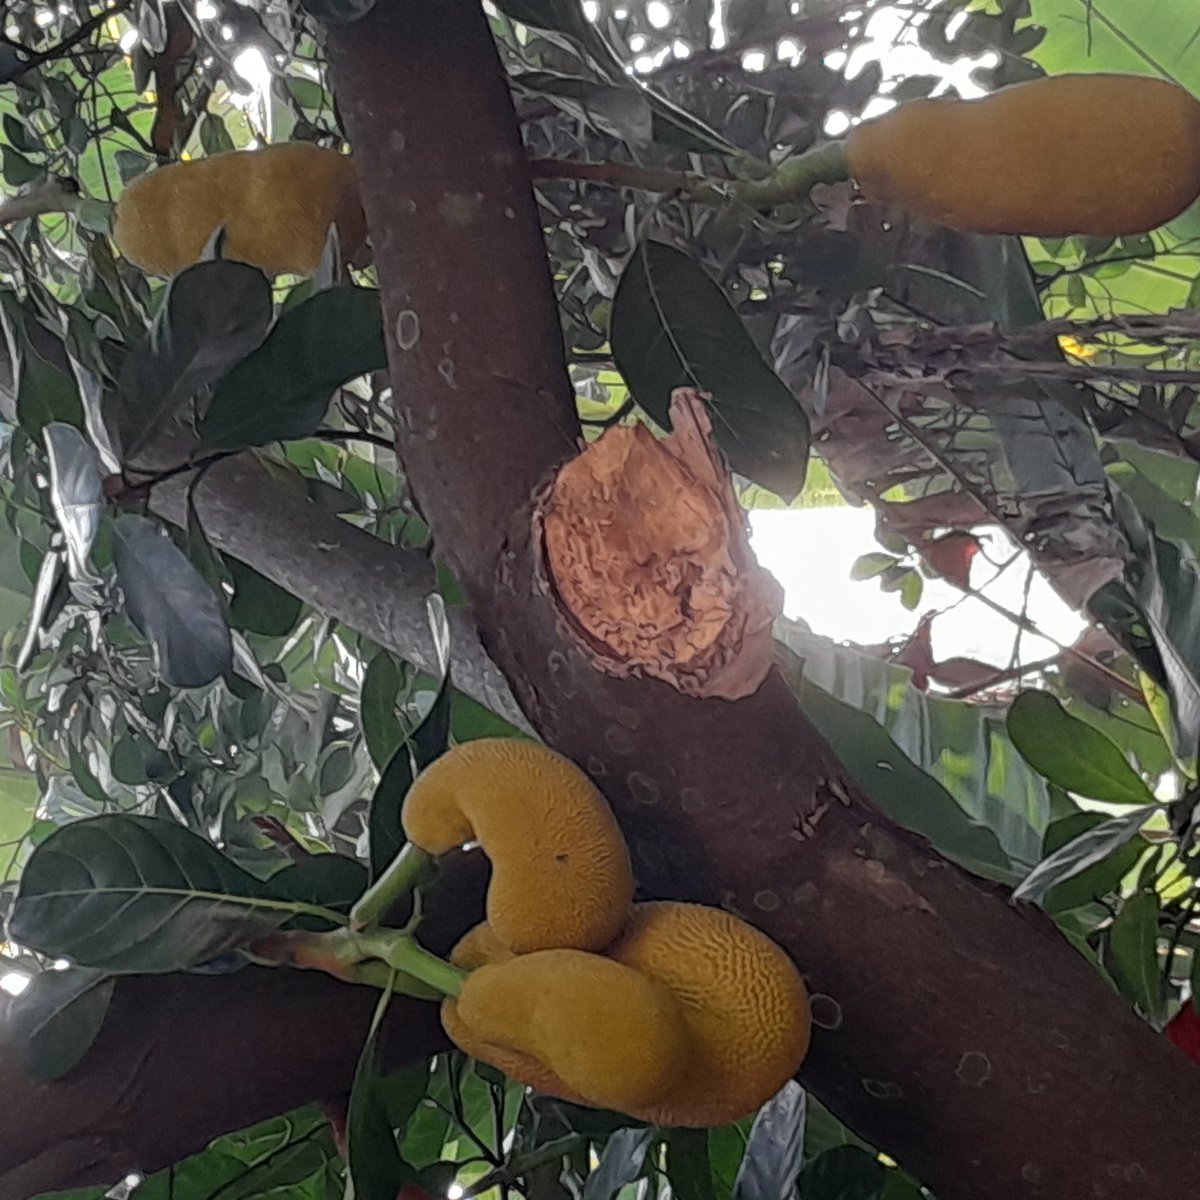 Jackfruit tree at our Barasat home